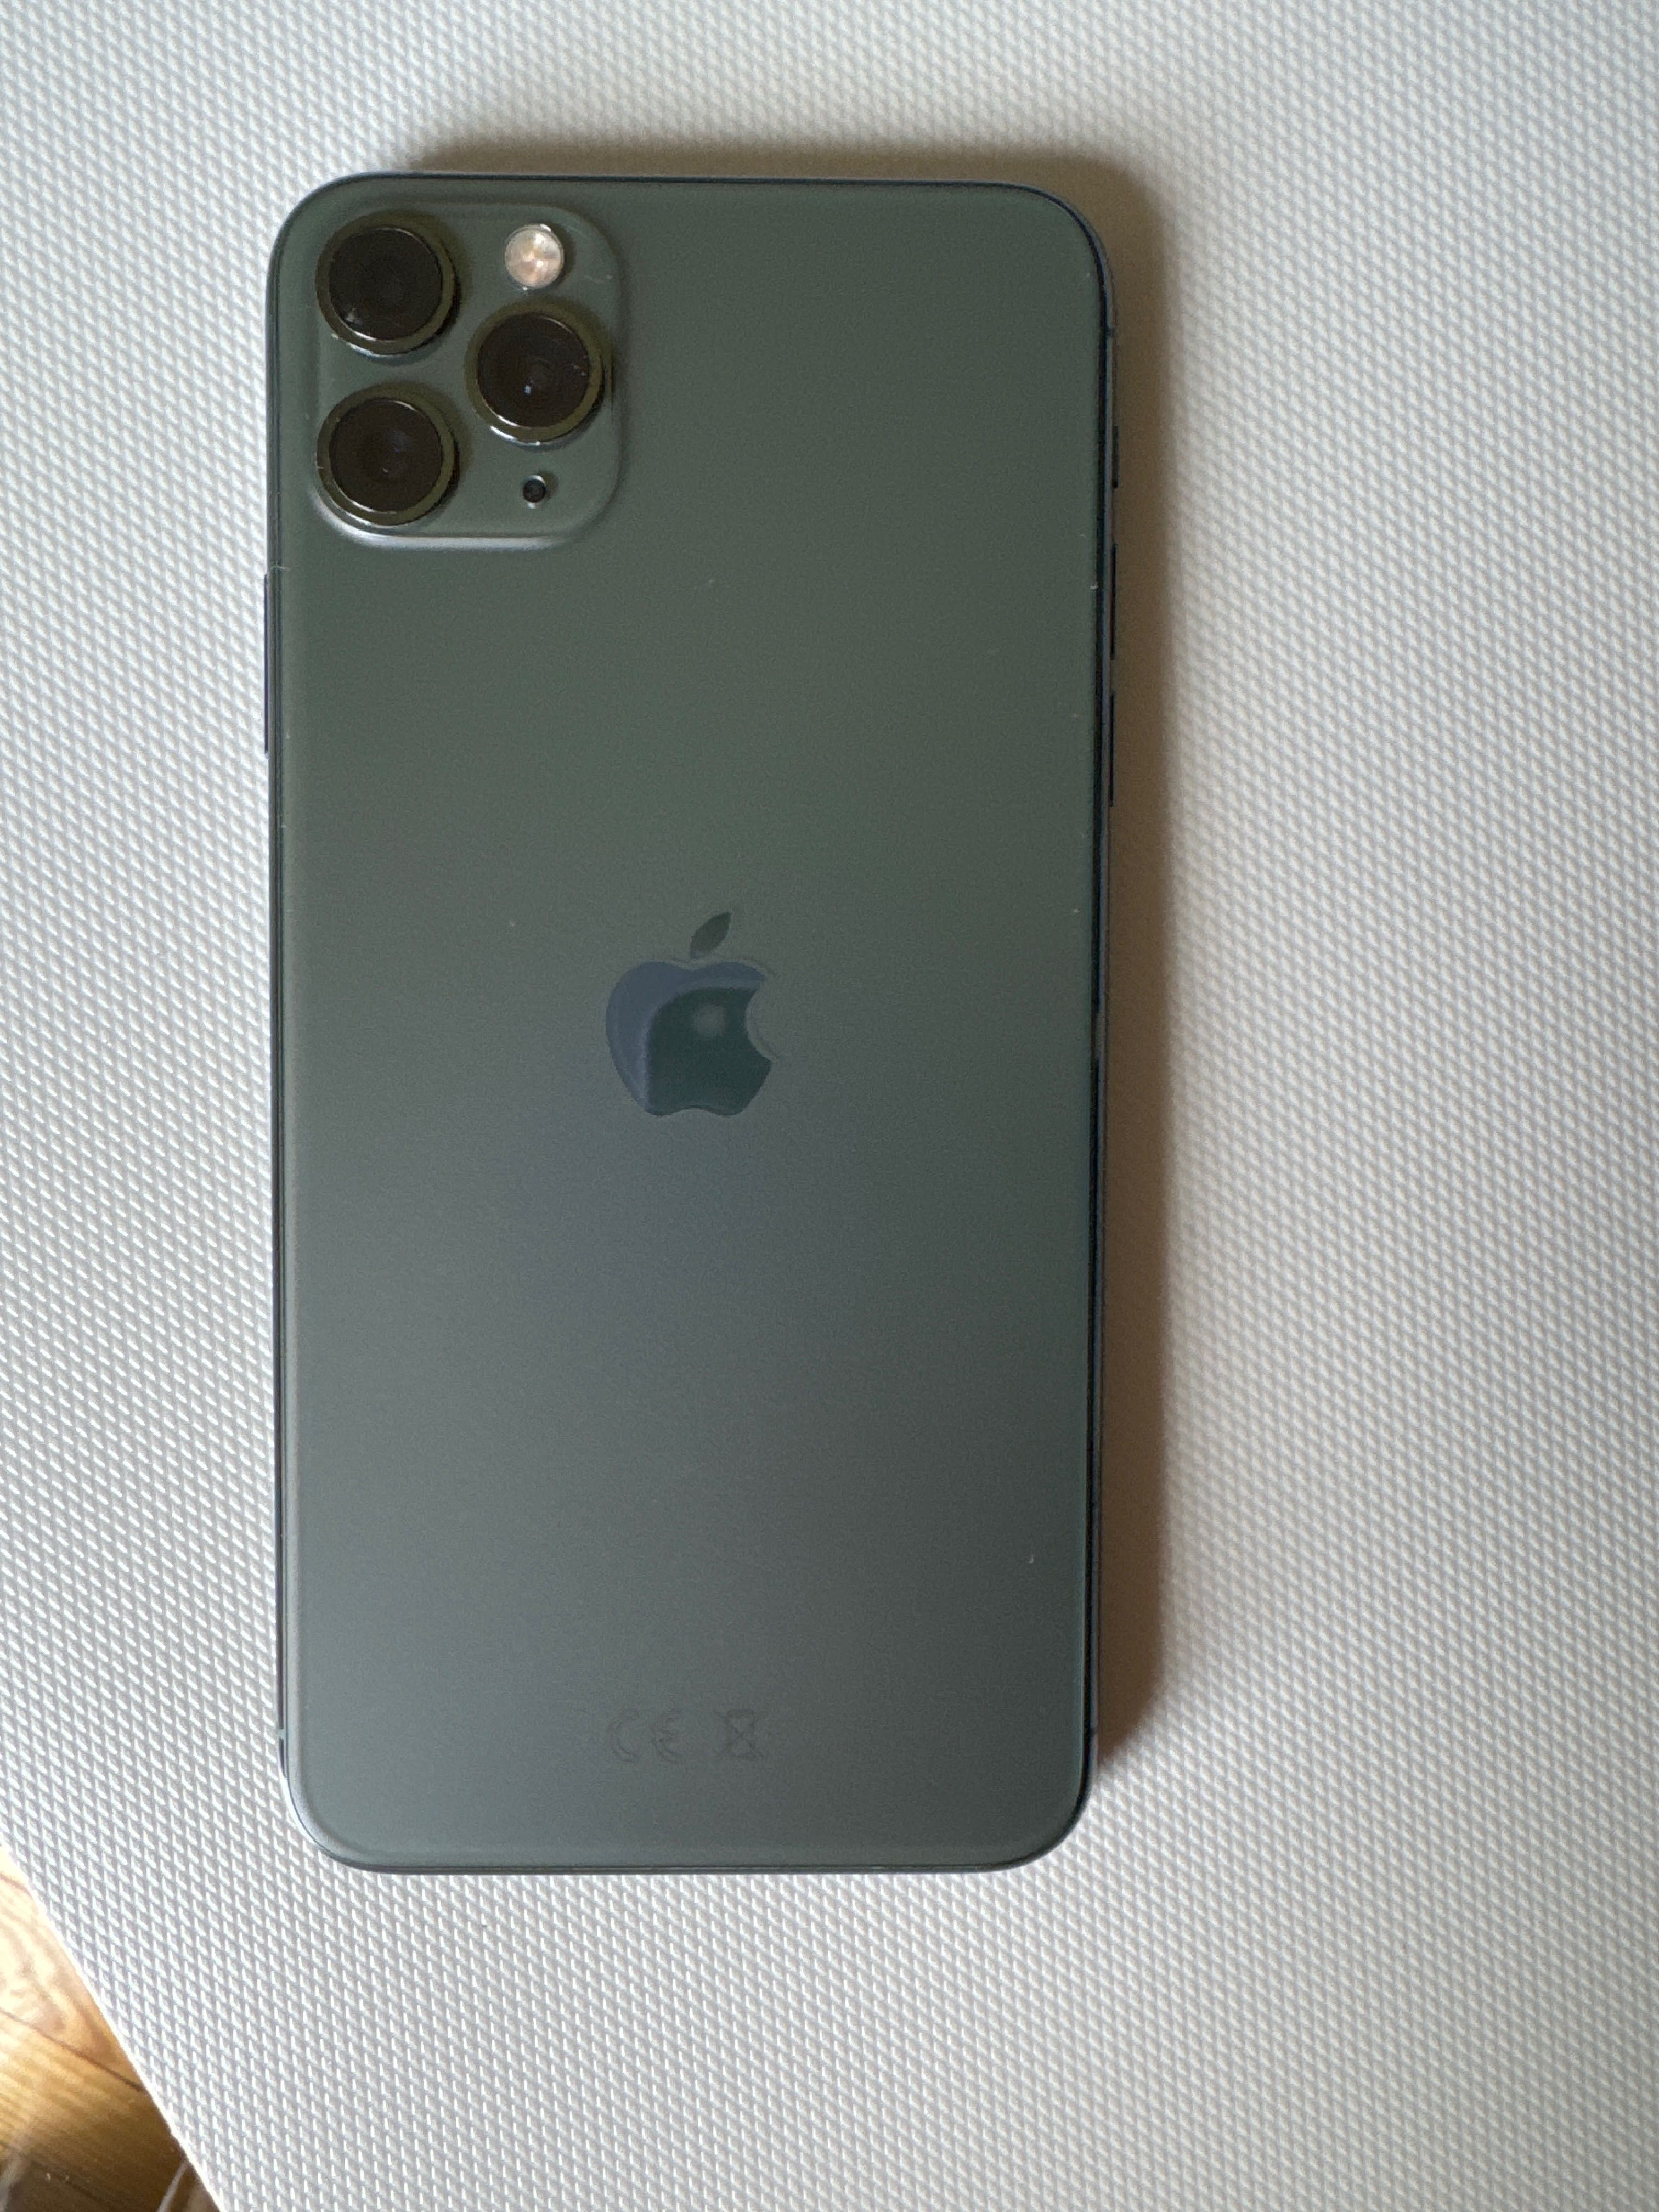 Iphone 11 Pro Max verde/green 64 gb